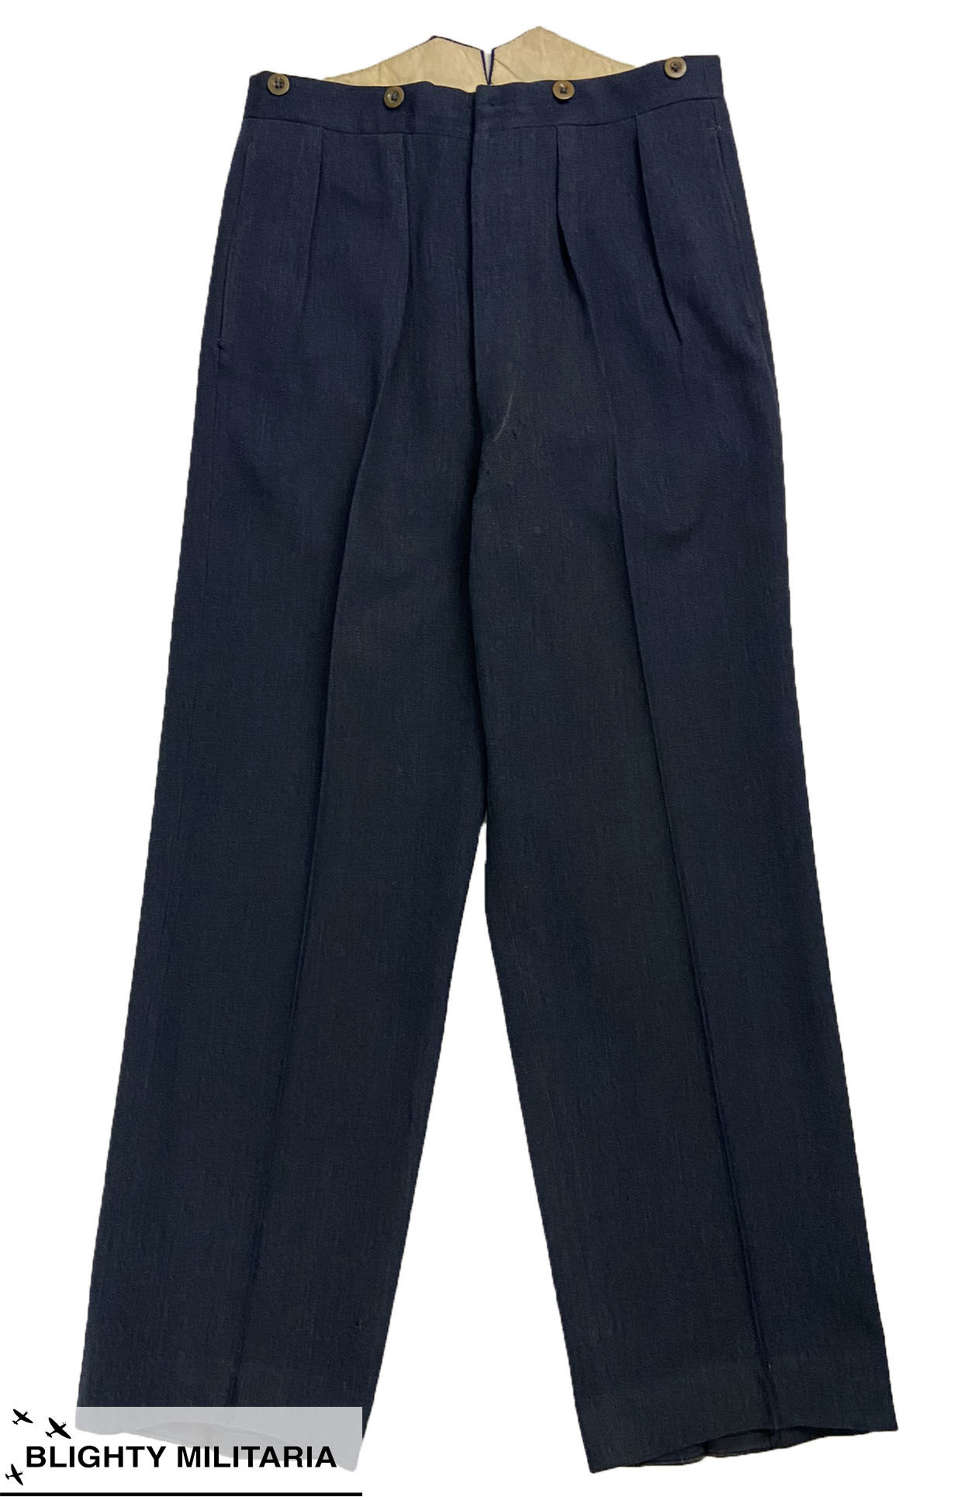 Original 1940s RAF Officer's Service Dress Trousers - Size 31x29.5